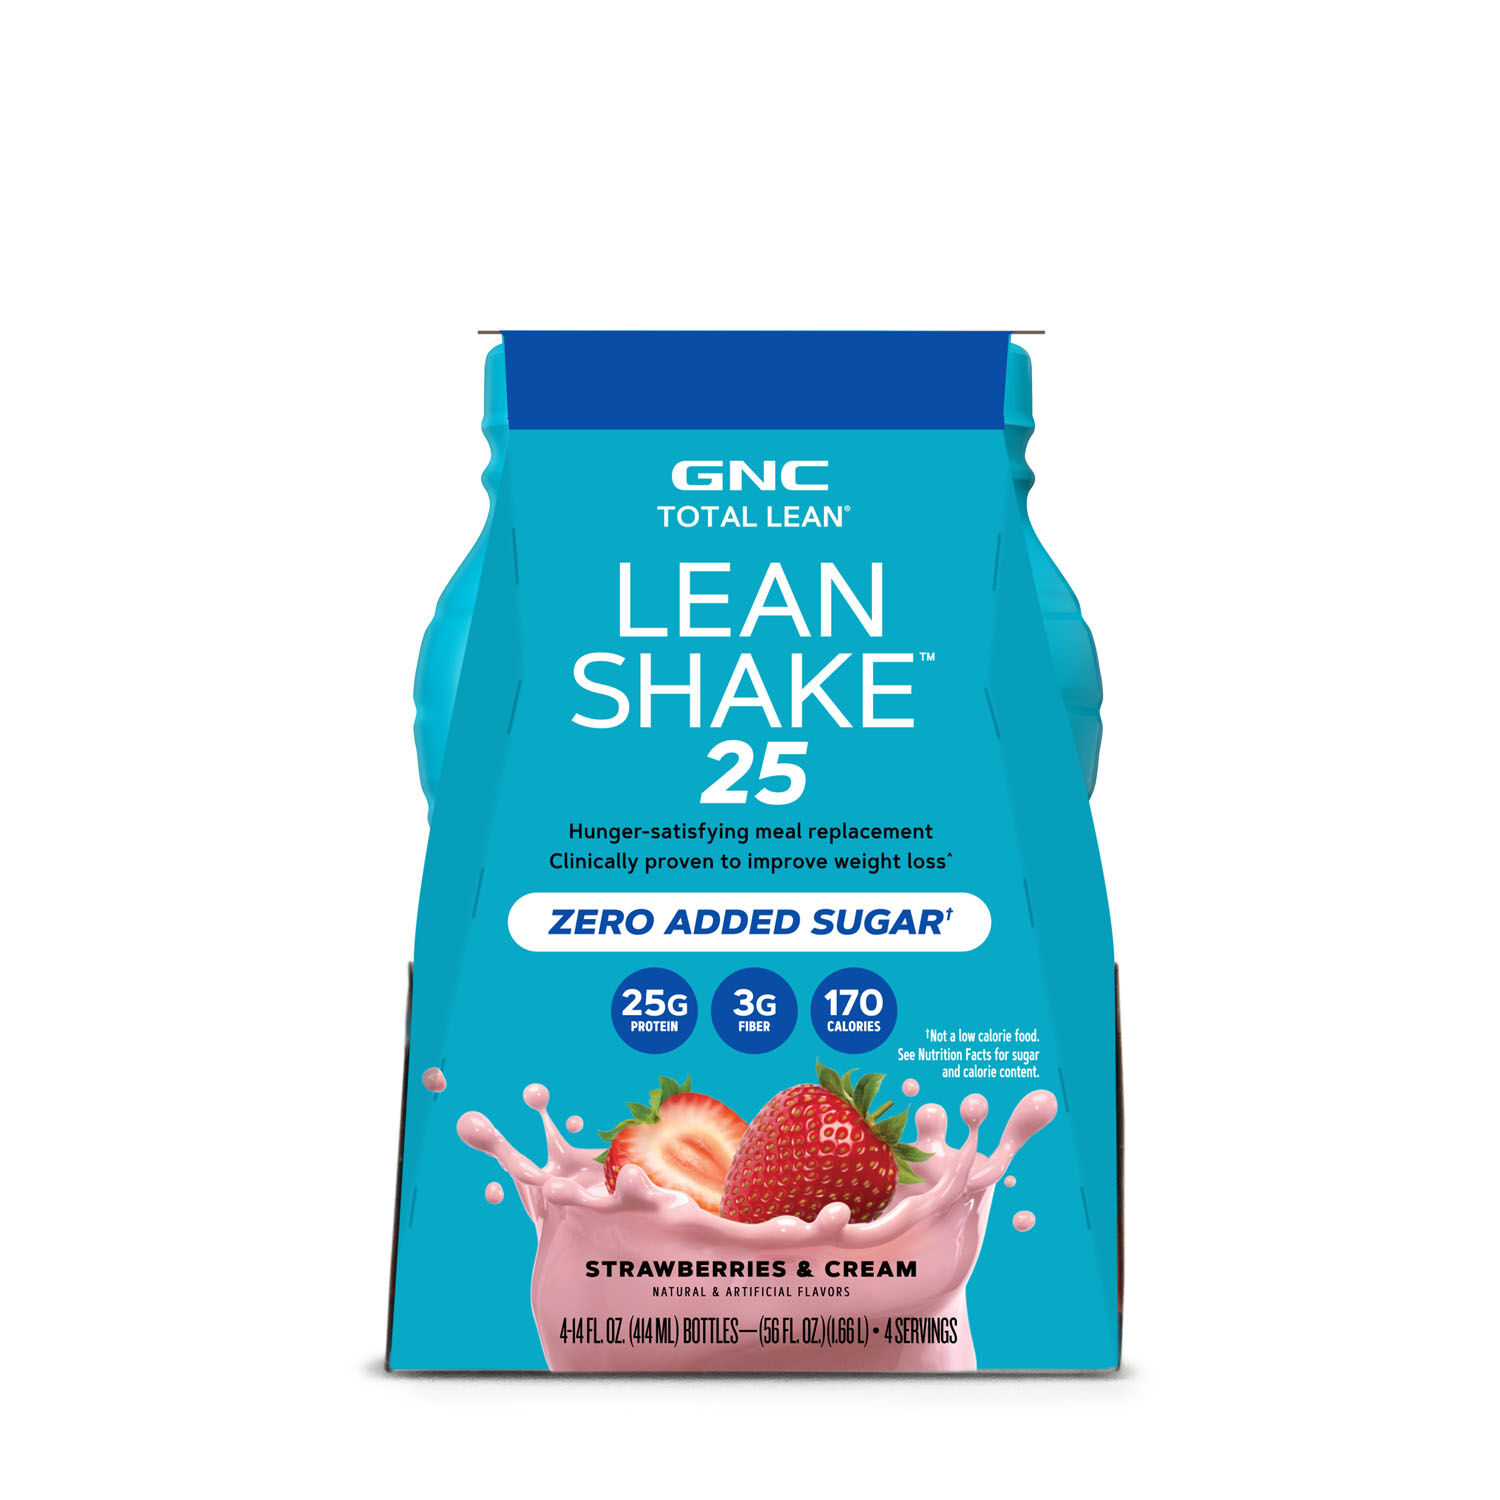 GNC Total Lean® Lean Shake™ 25 - Strawberries and Cream photo